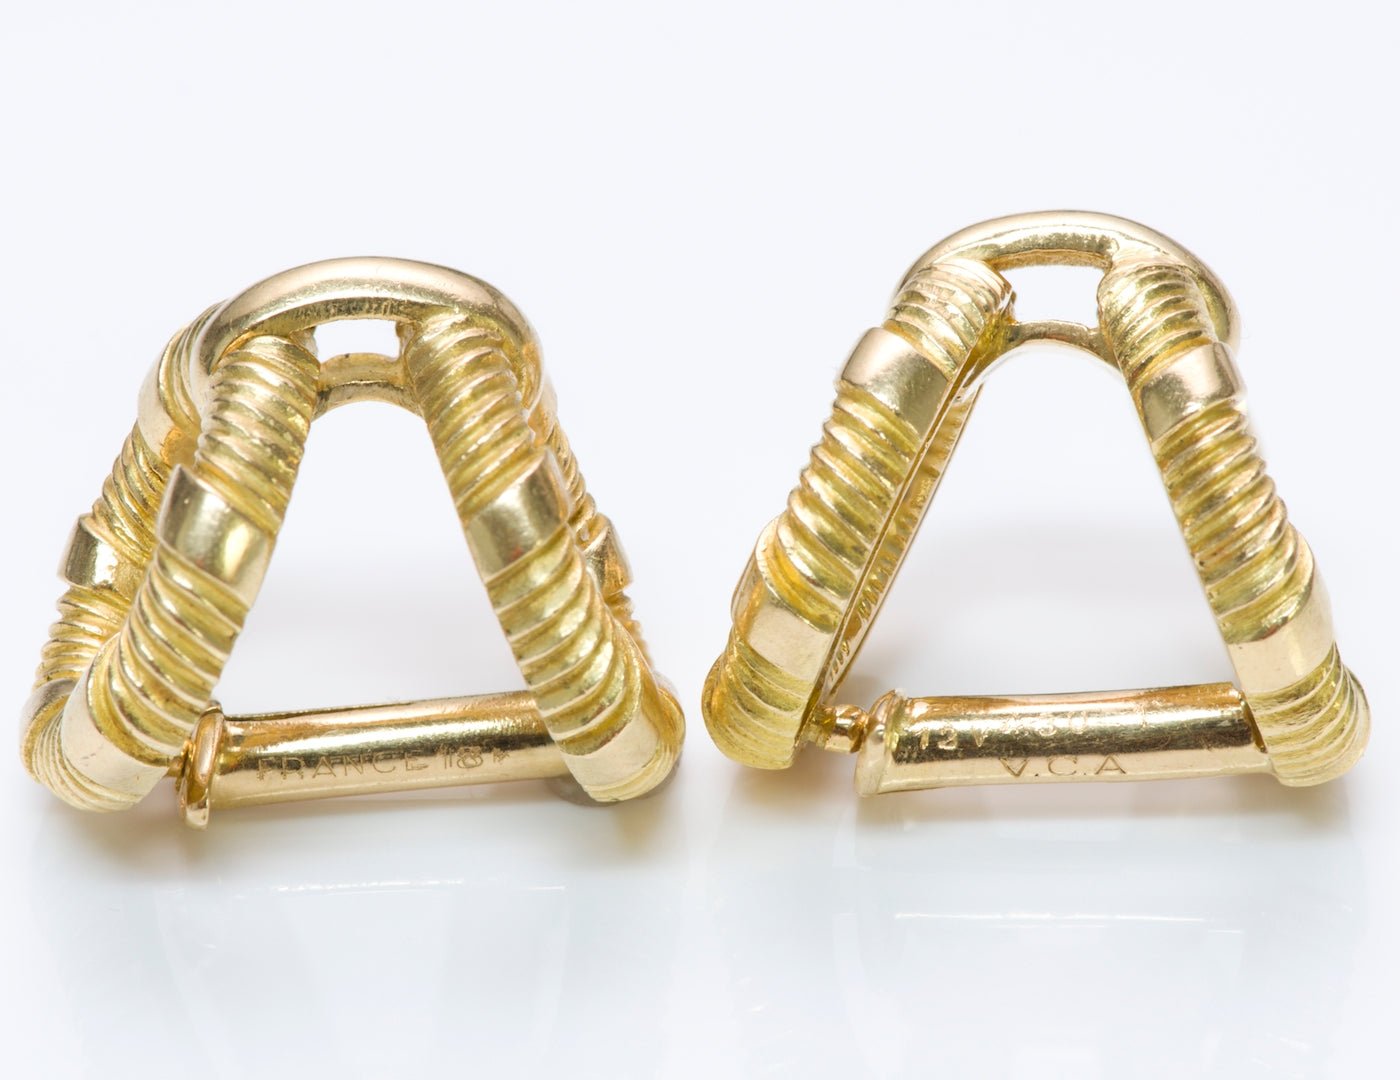 Van Cleef & Arpels France 18K Gold Cufflinks